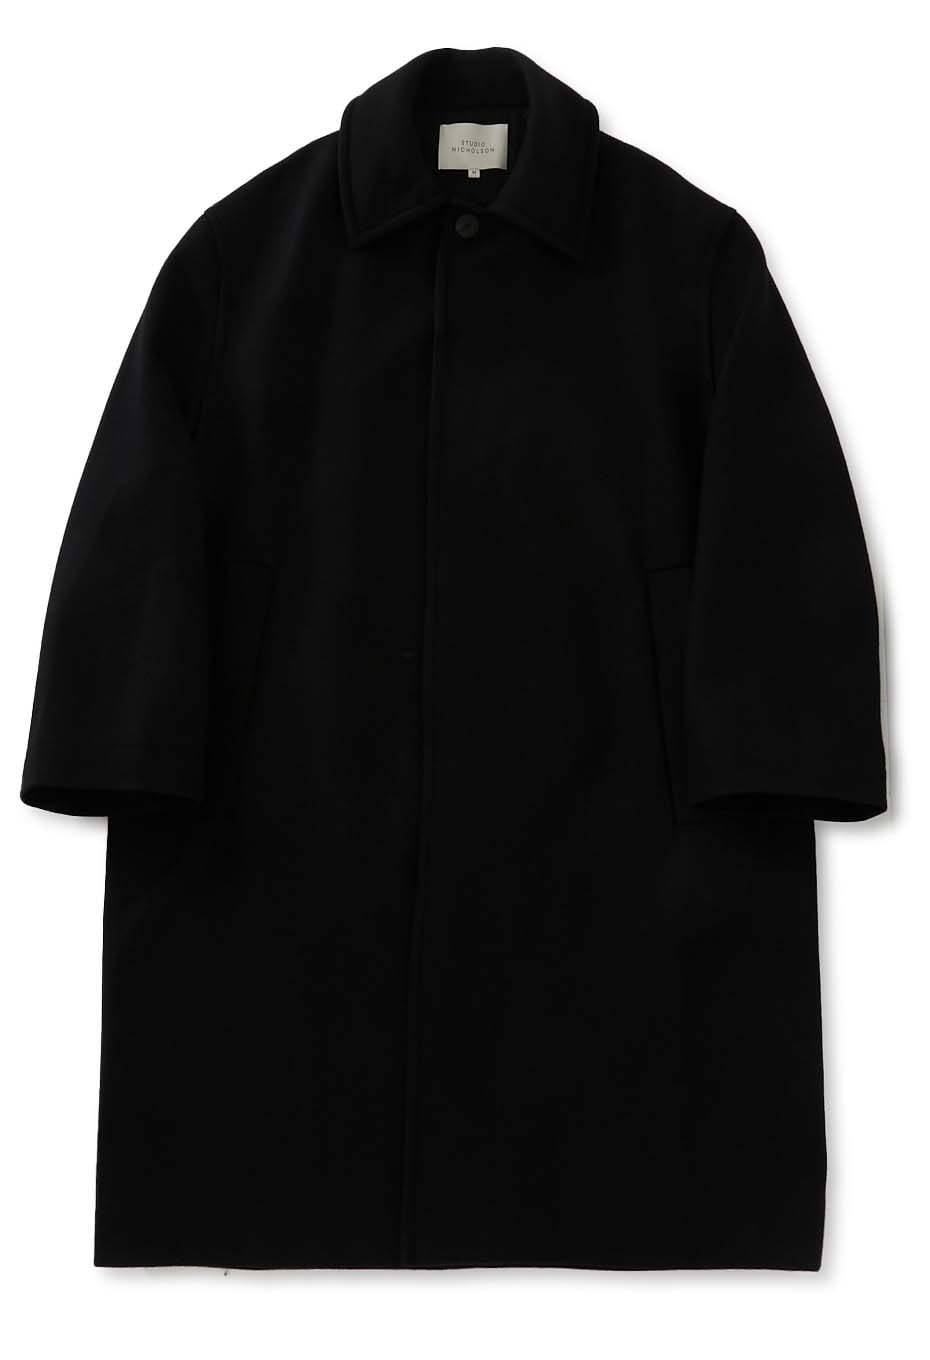 STUDIO NICHOLSON /WAIN melton wool overcoat